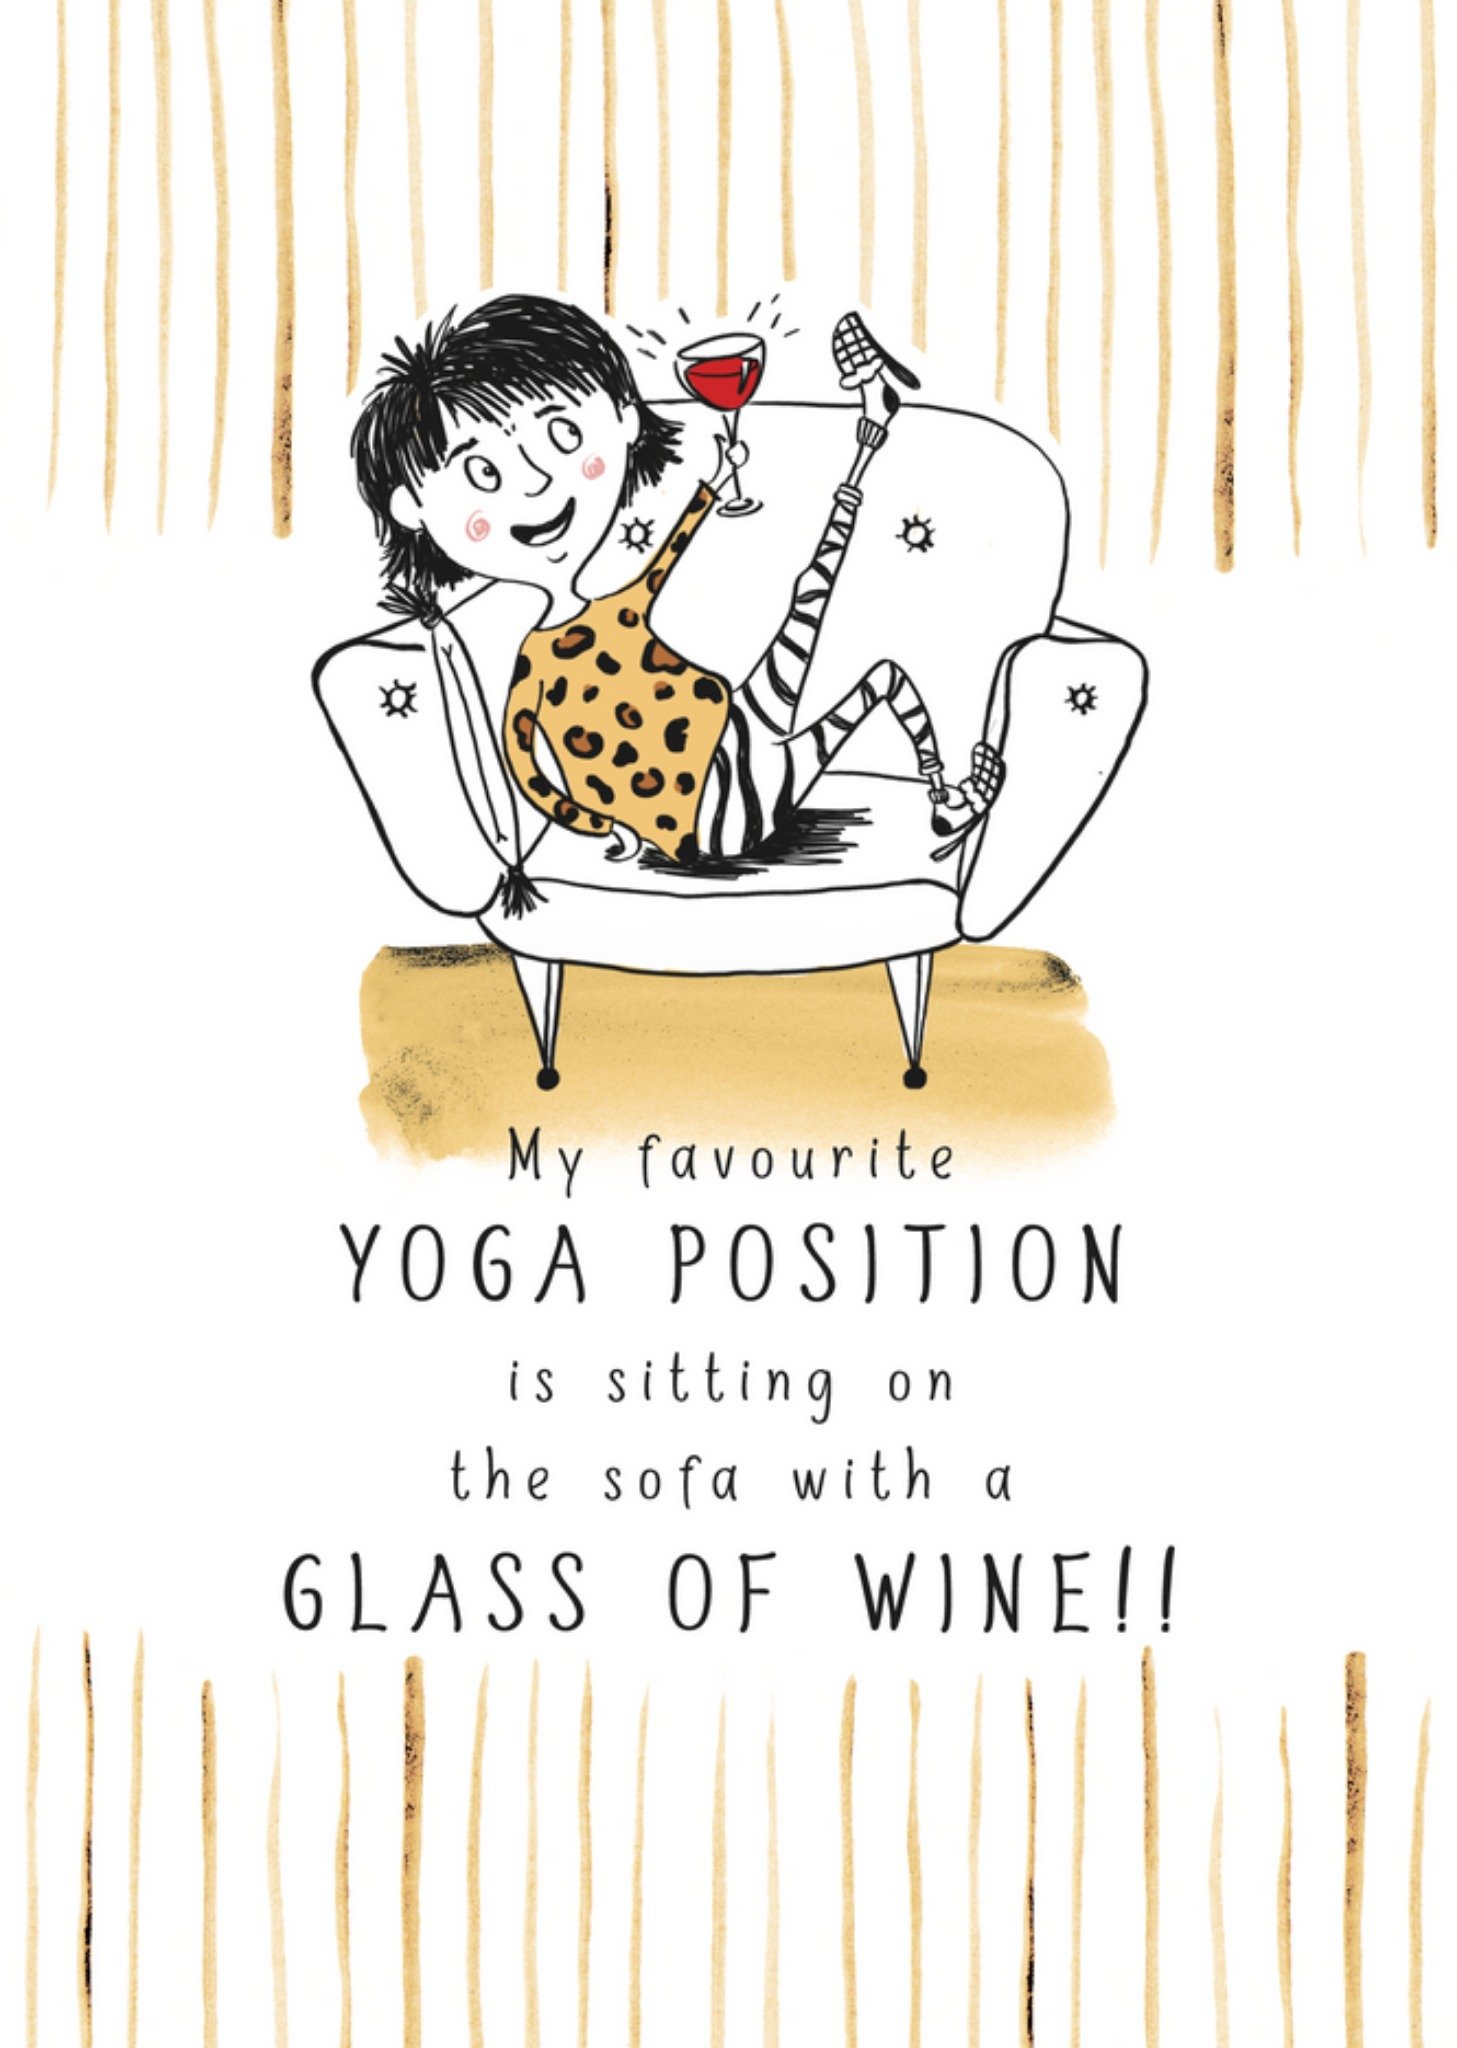 Moonpig Cheeky Illustrated Yoga Glass Of Wine Birthday Greetings Card, Large